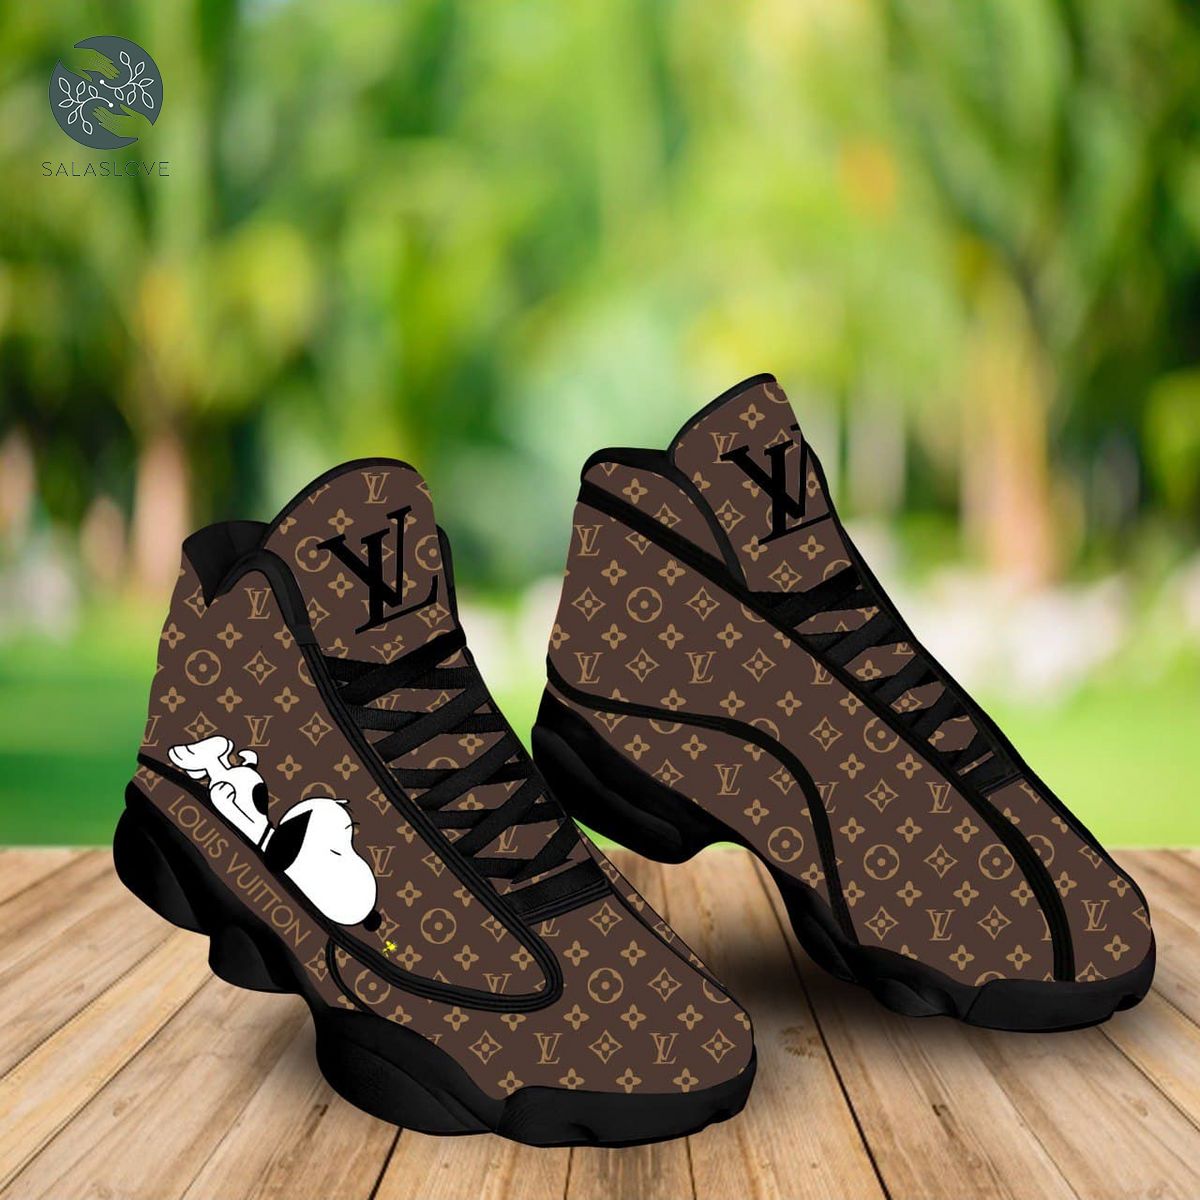 Louis Vuitton Snoopy Air Jordan 13 Sneakers Shoes Gift